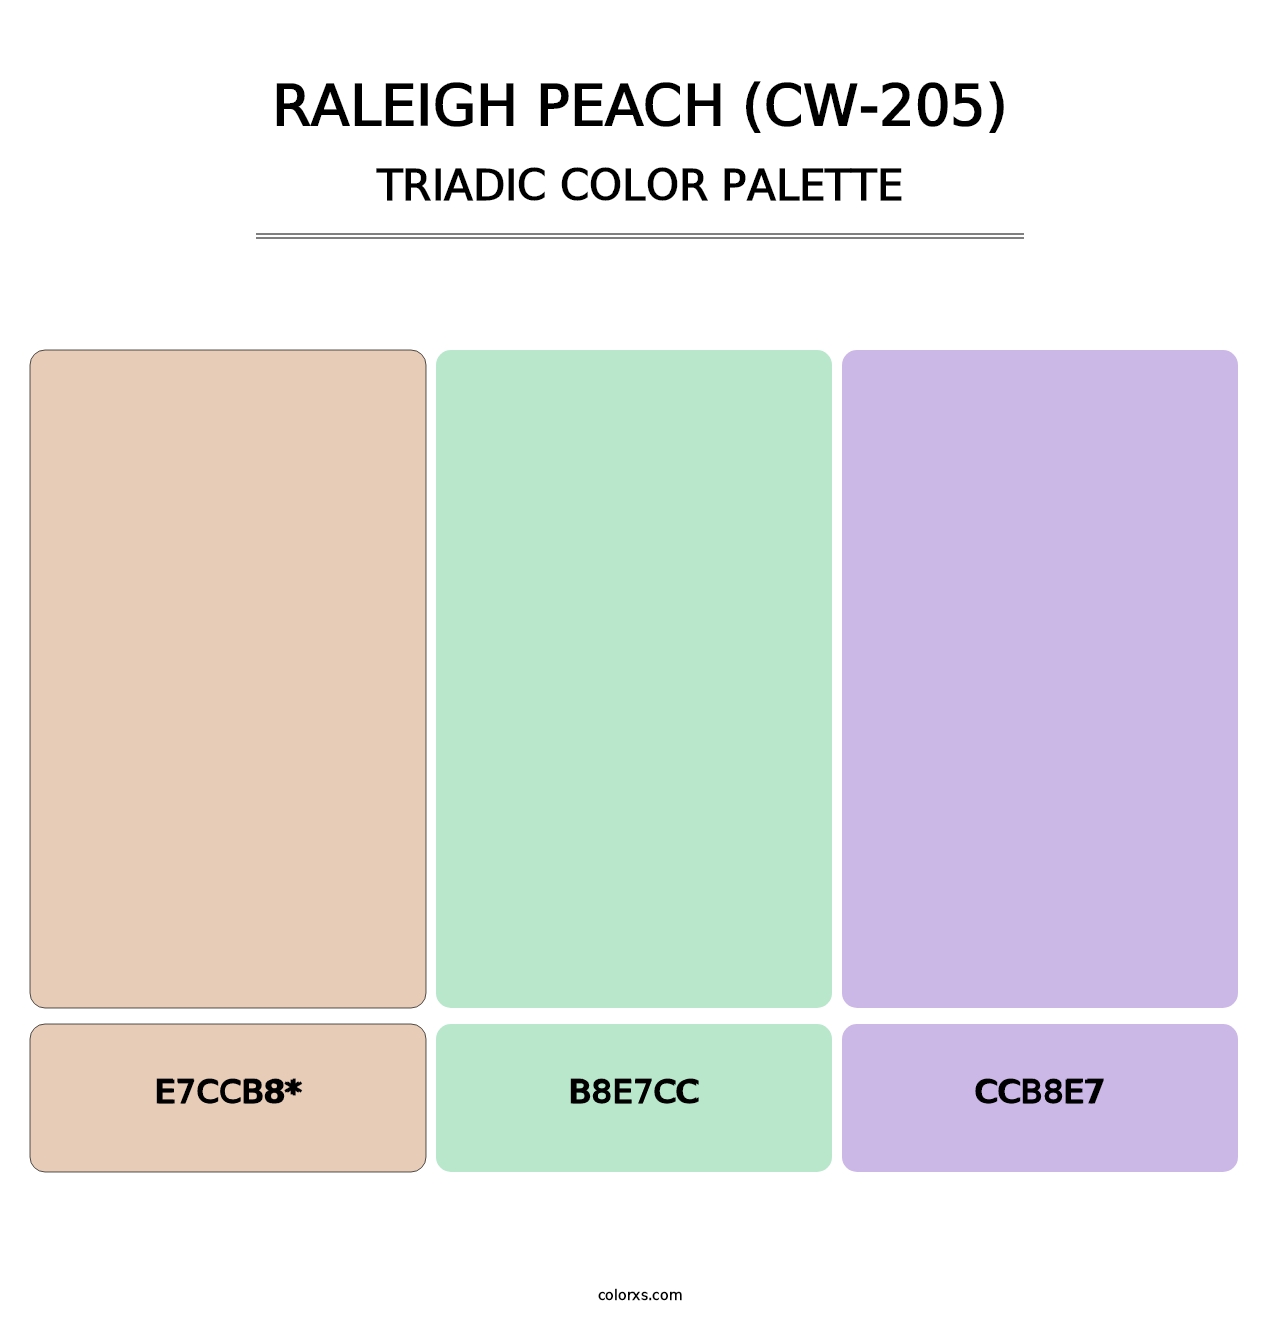 Raleigh Peach (CW-205) - Triadic Color Palette